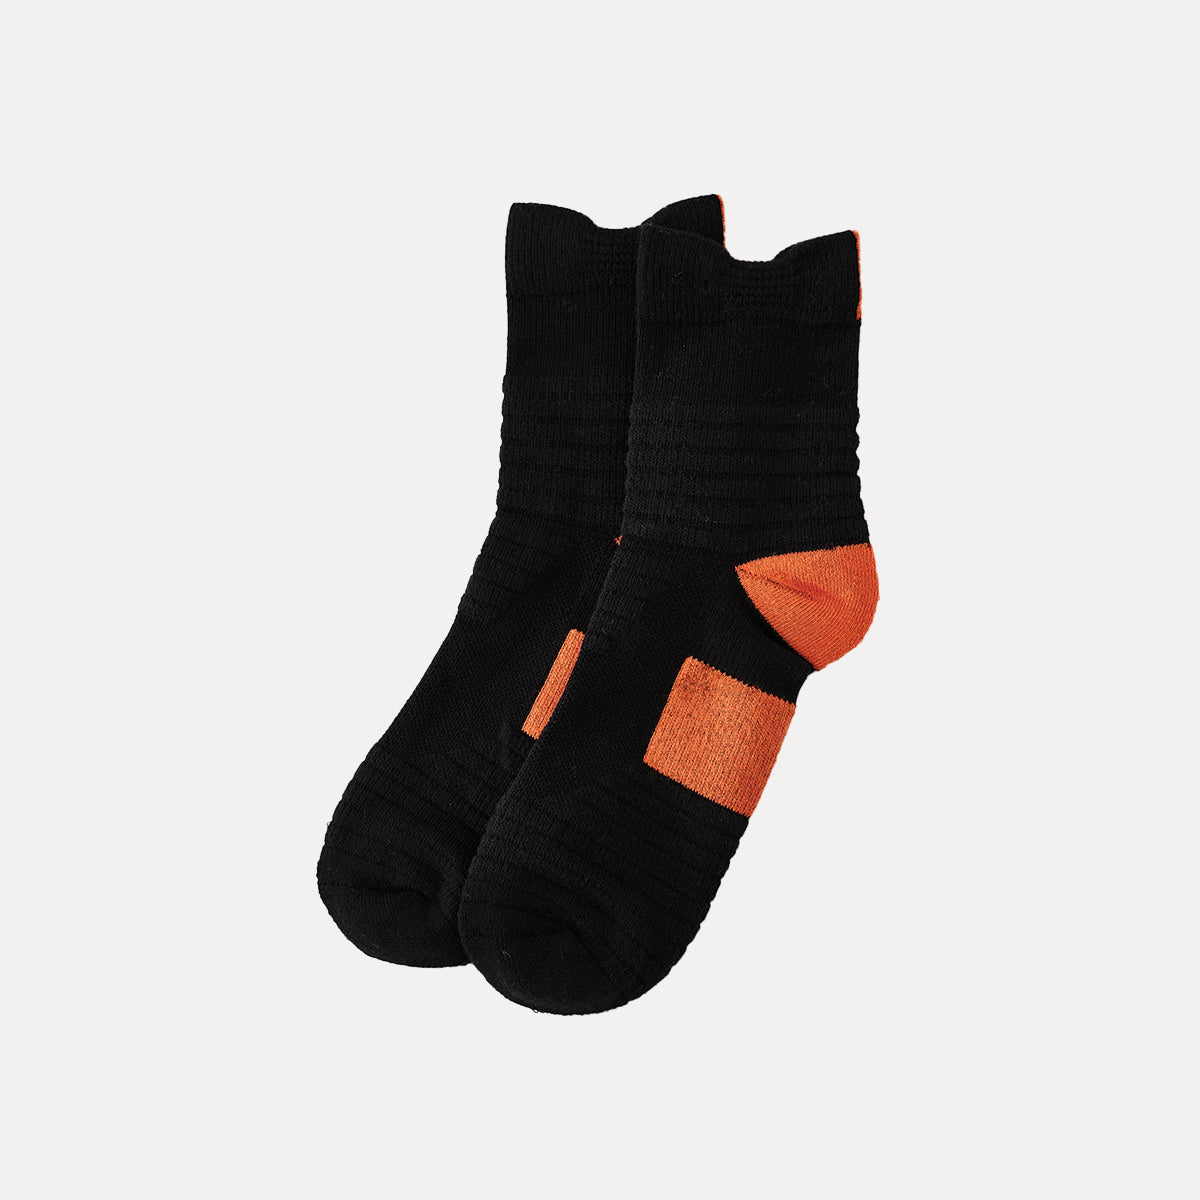 SOCKIC | ACTIVE Crew Sock - Hi Black/Orange